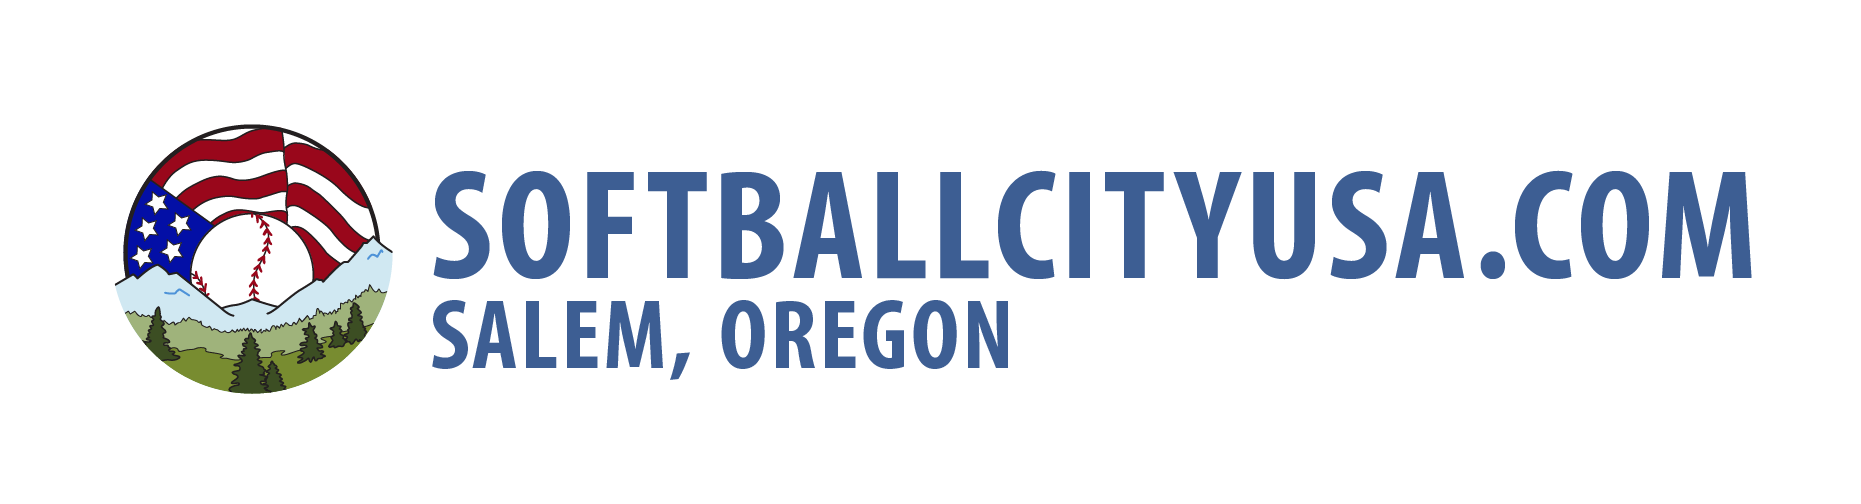 Softball City USA logo